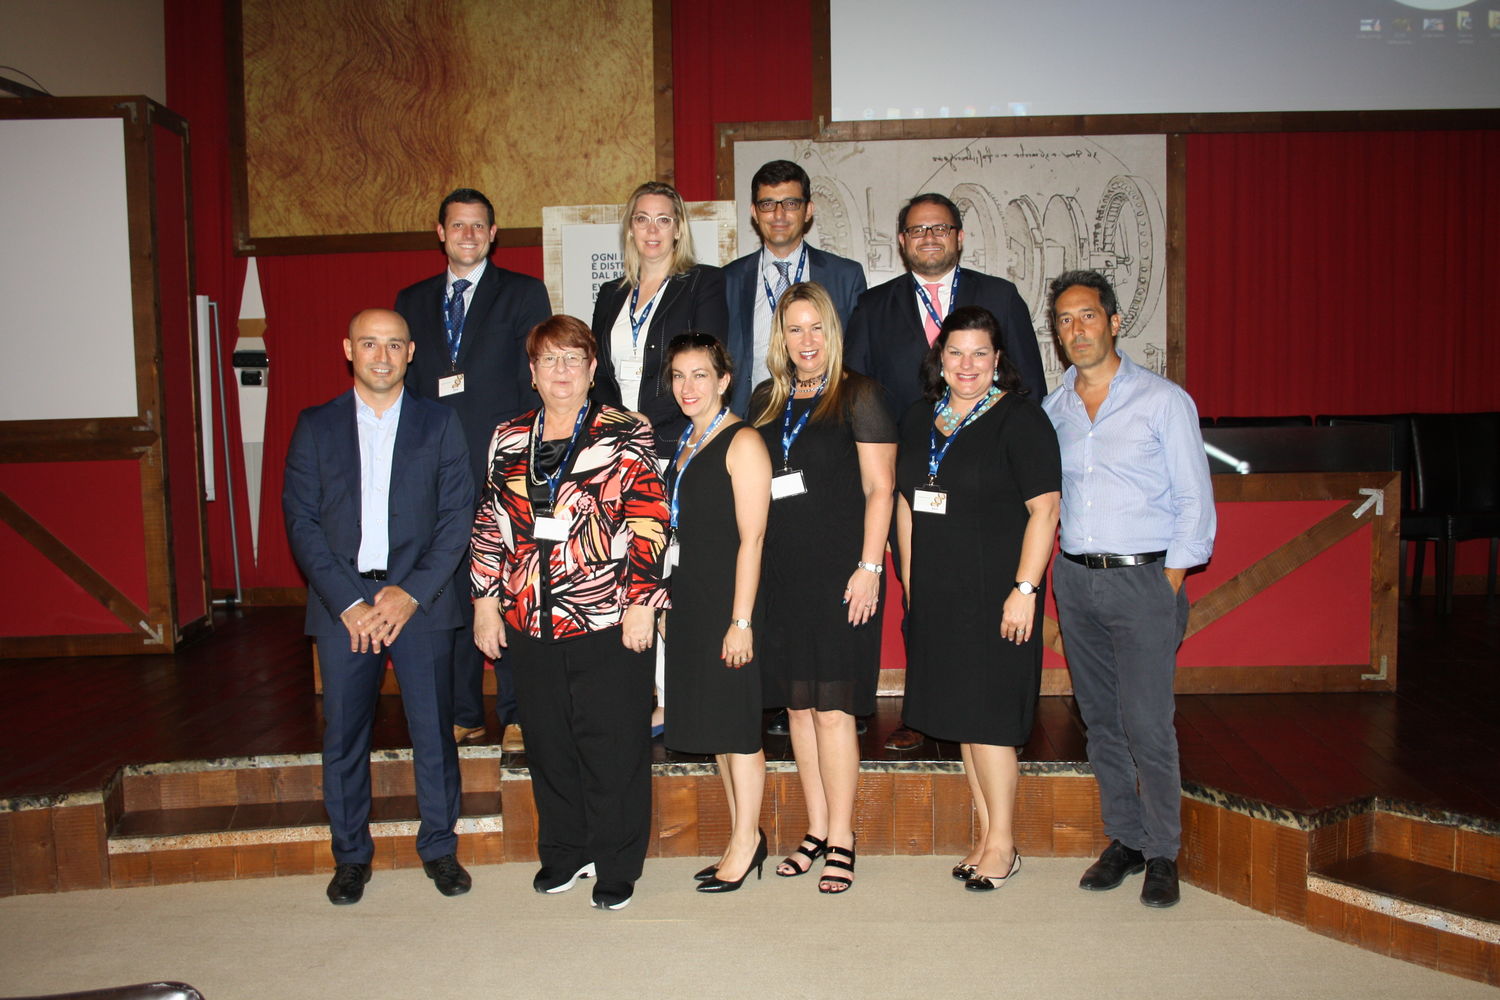 A "Partnership Gwinnett" delegation visit the SCM Group 